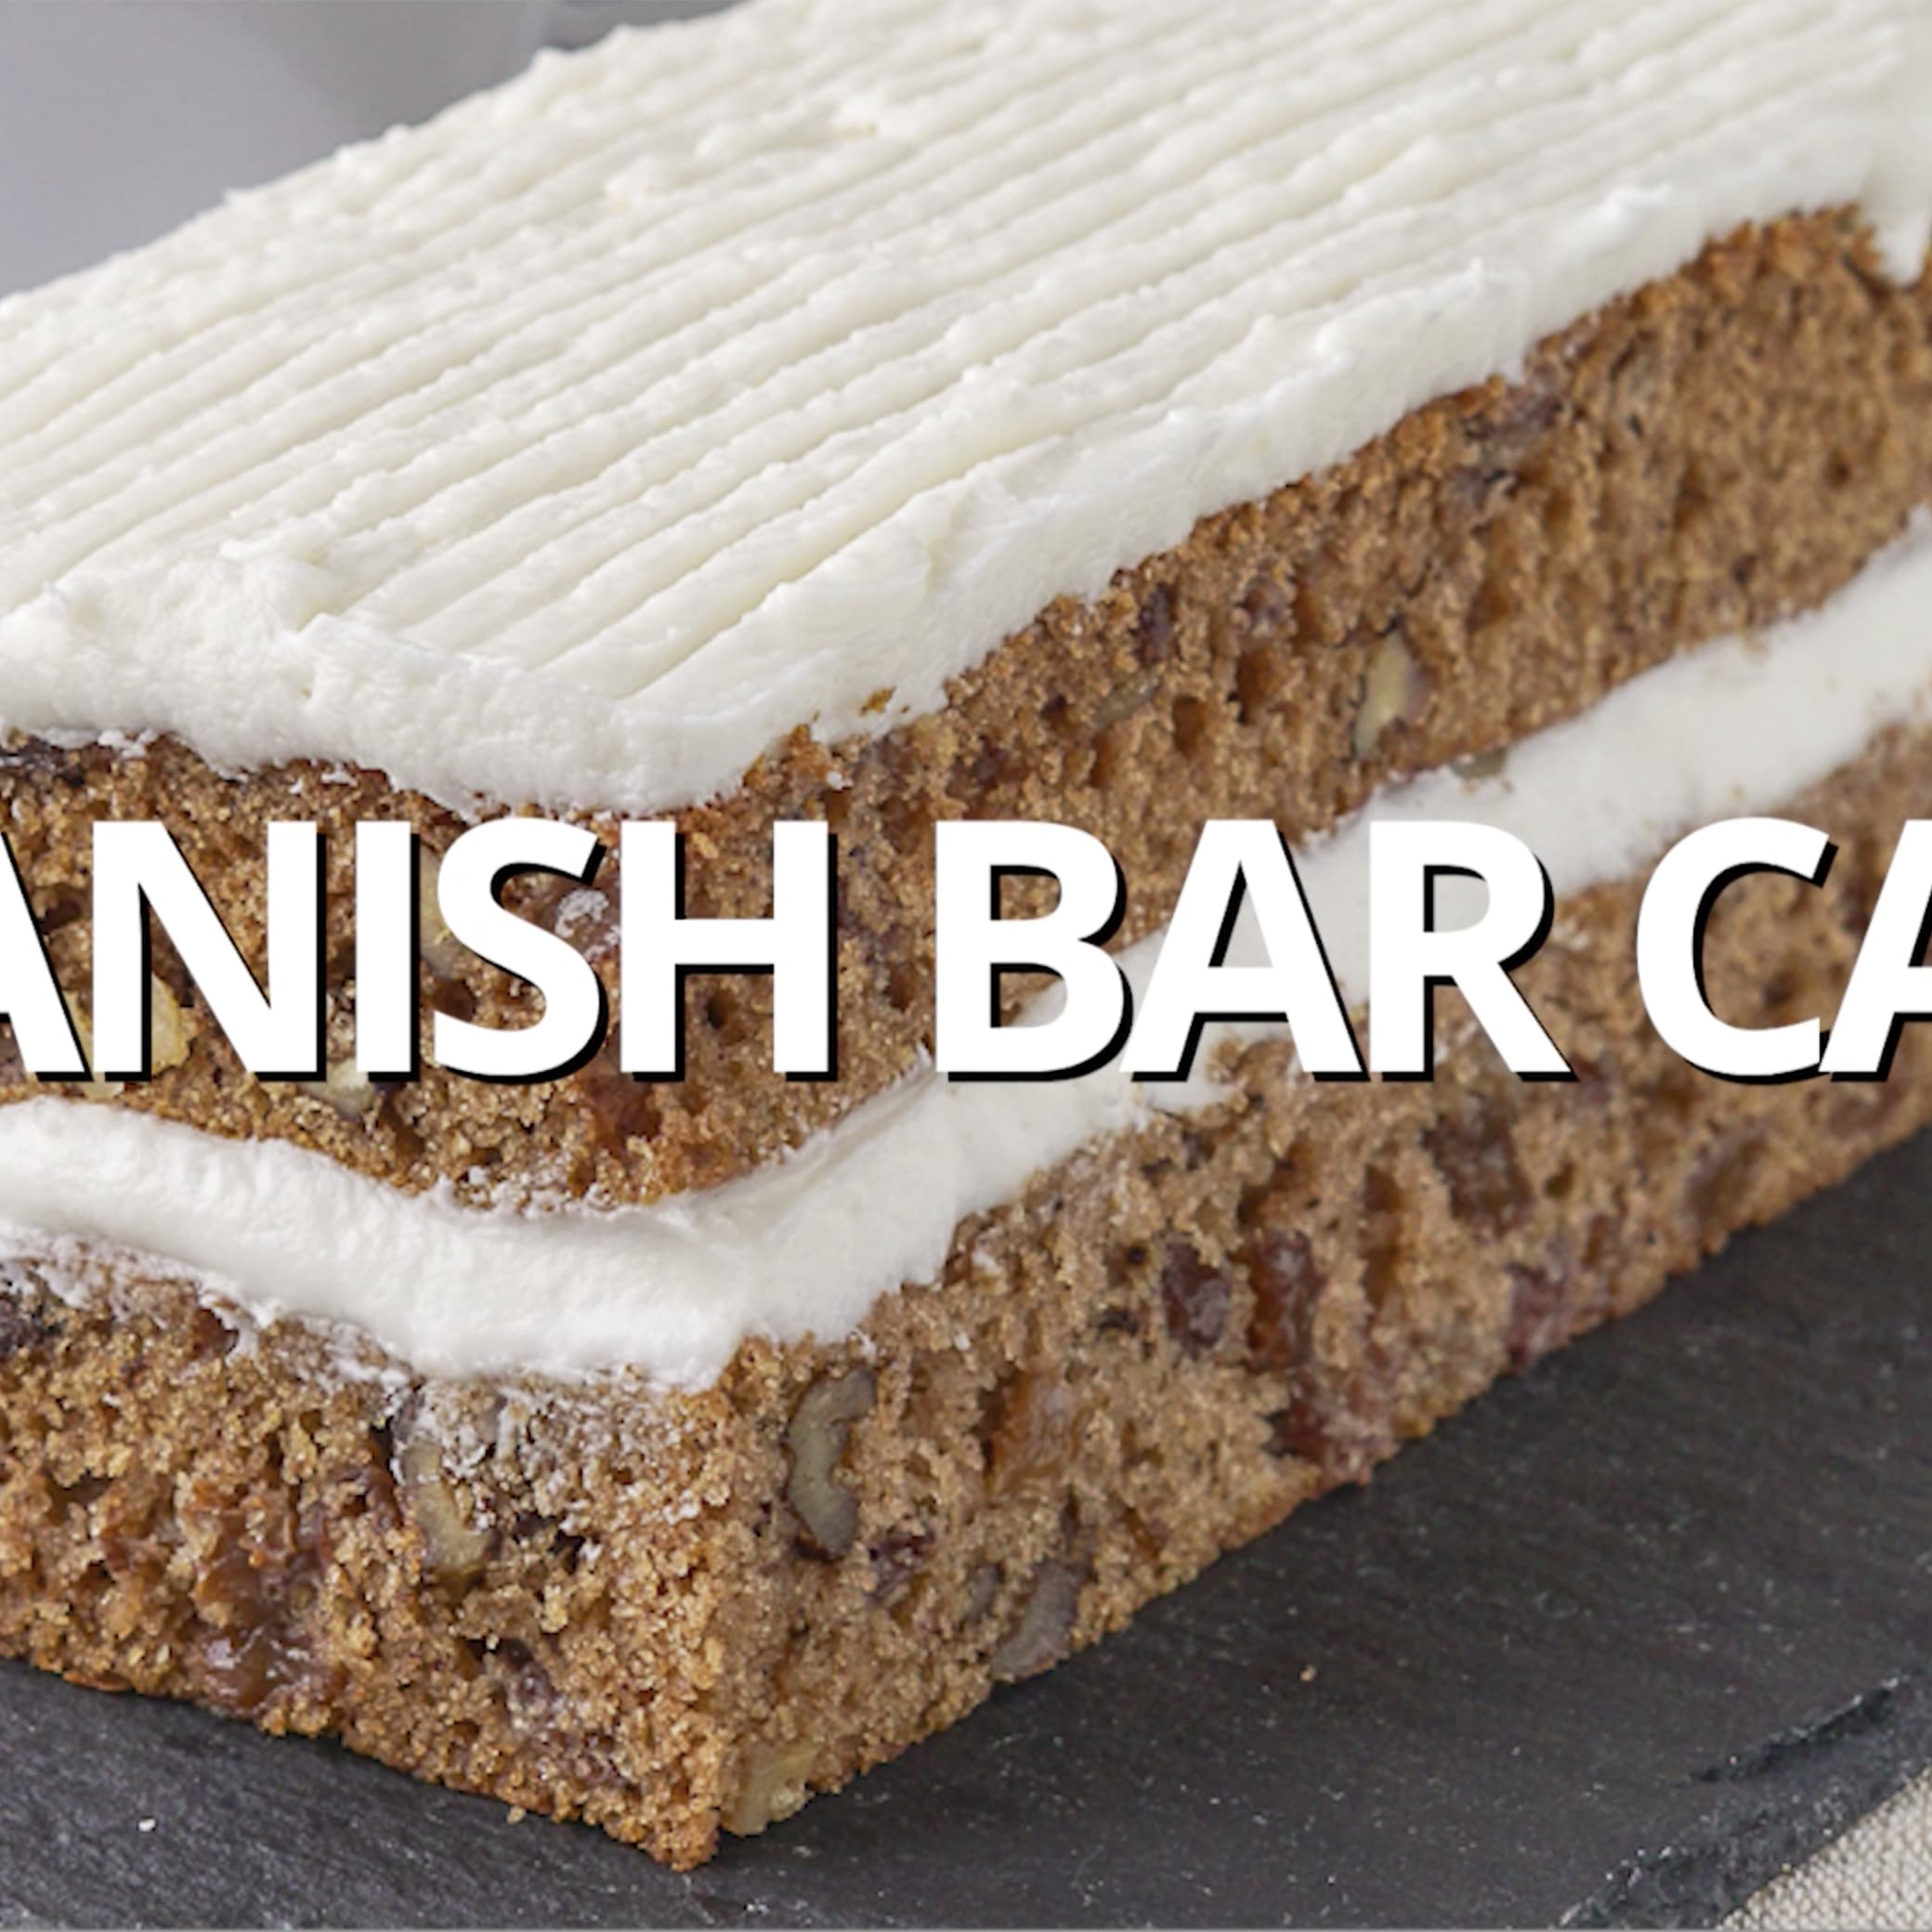 A&P Spanish Bar Cake | Willow Bird Baking